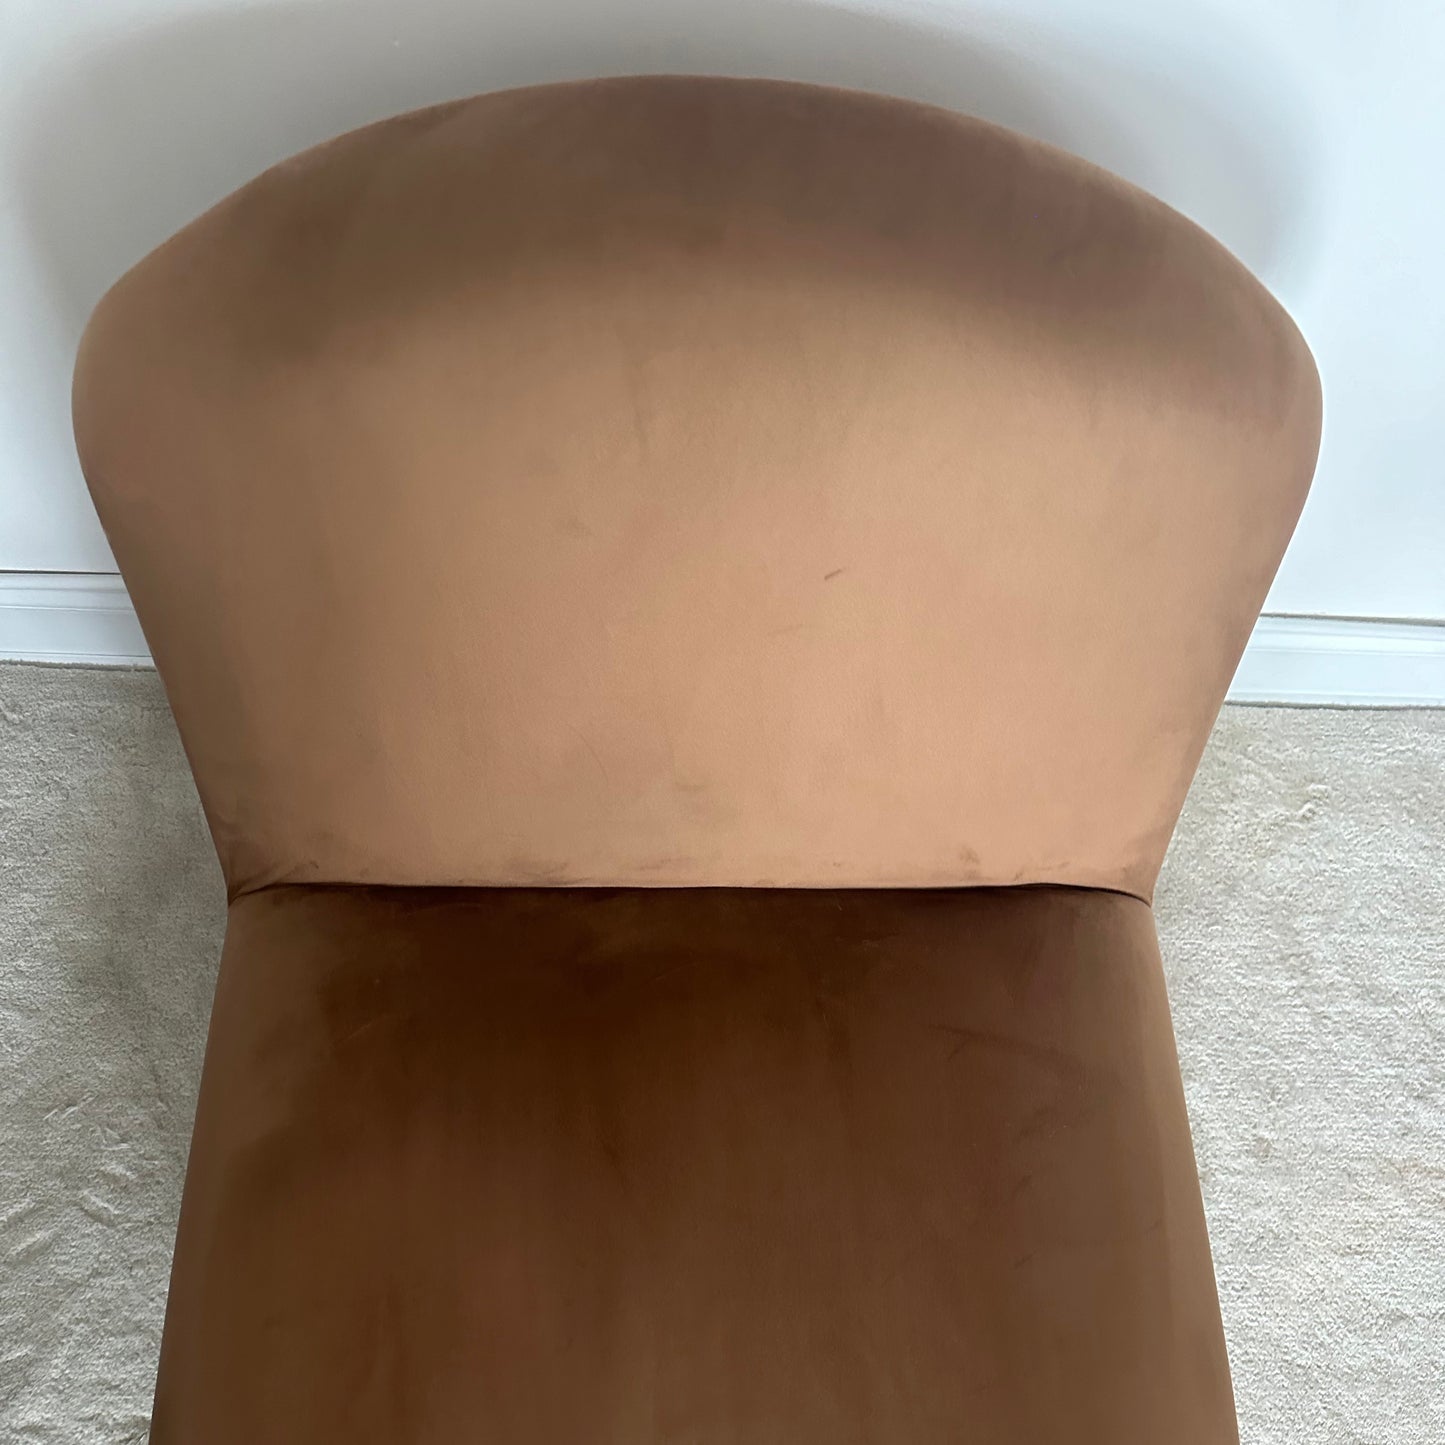 Alky Chair - Nut 105 - Floor Model - Grade A